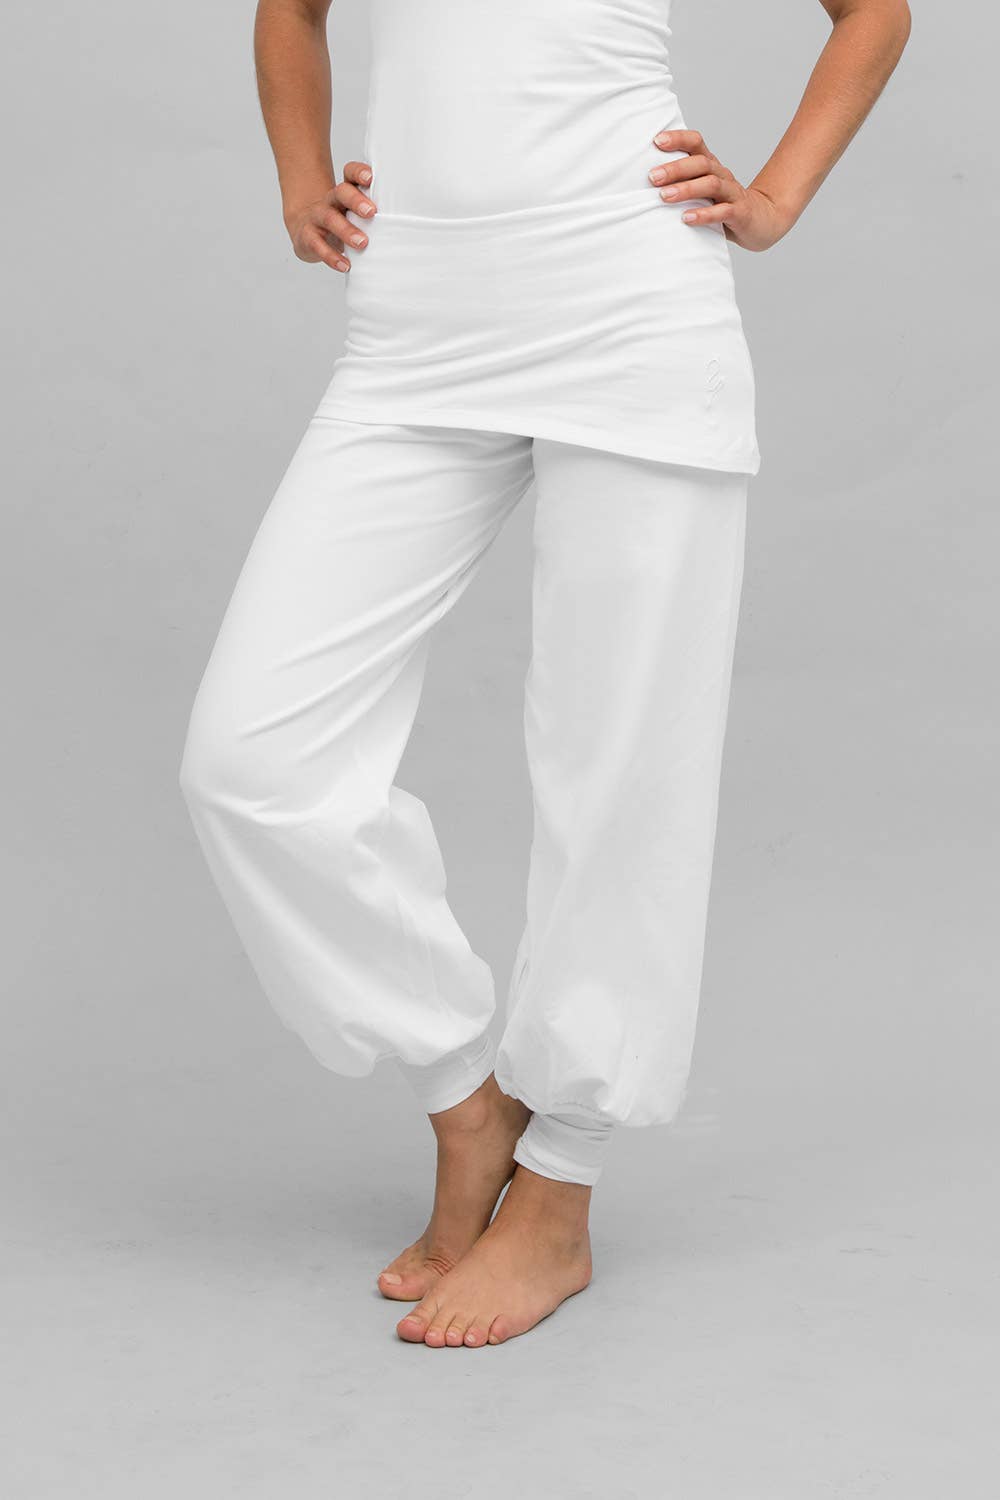 Organic women's yoga pants - Aum - Ohm clothing